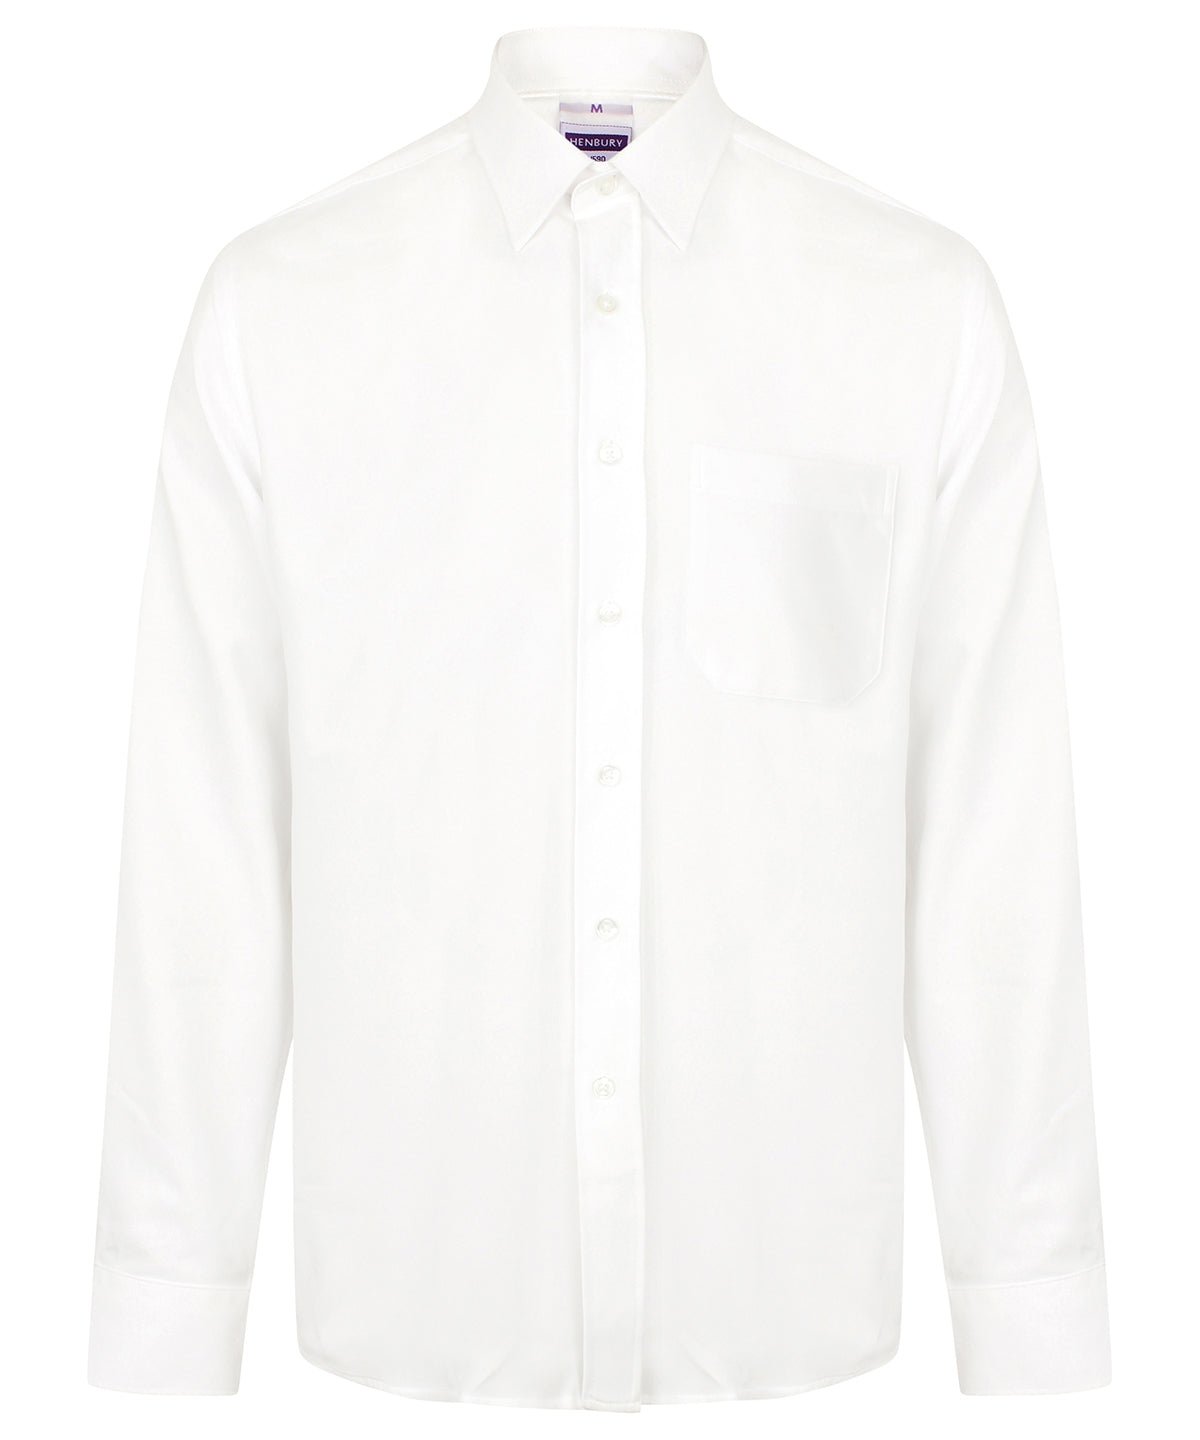 Bolir - Wicking Antibacterial Long Sleeve Shirt